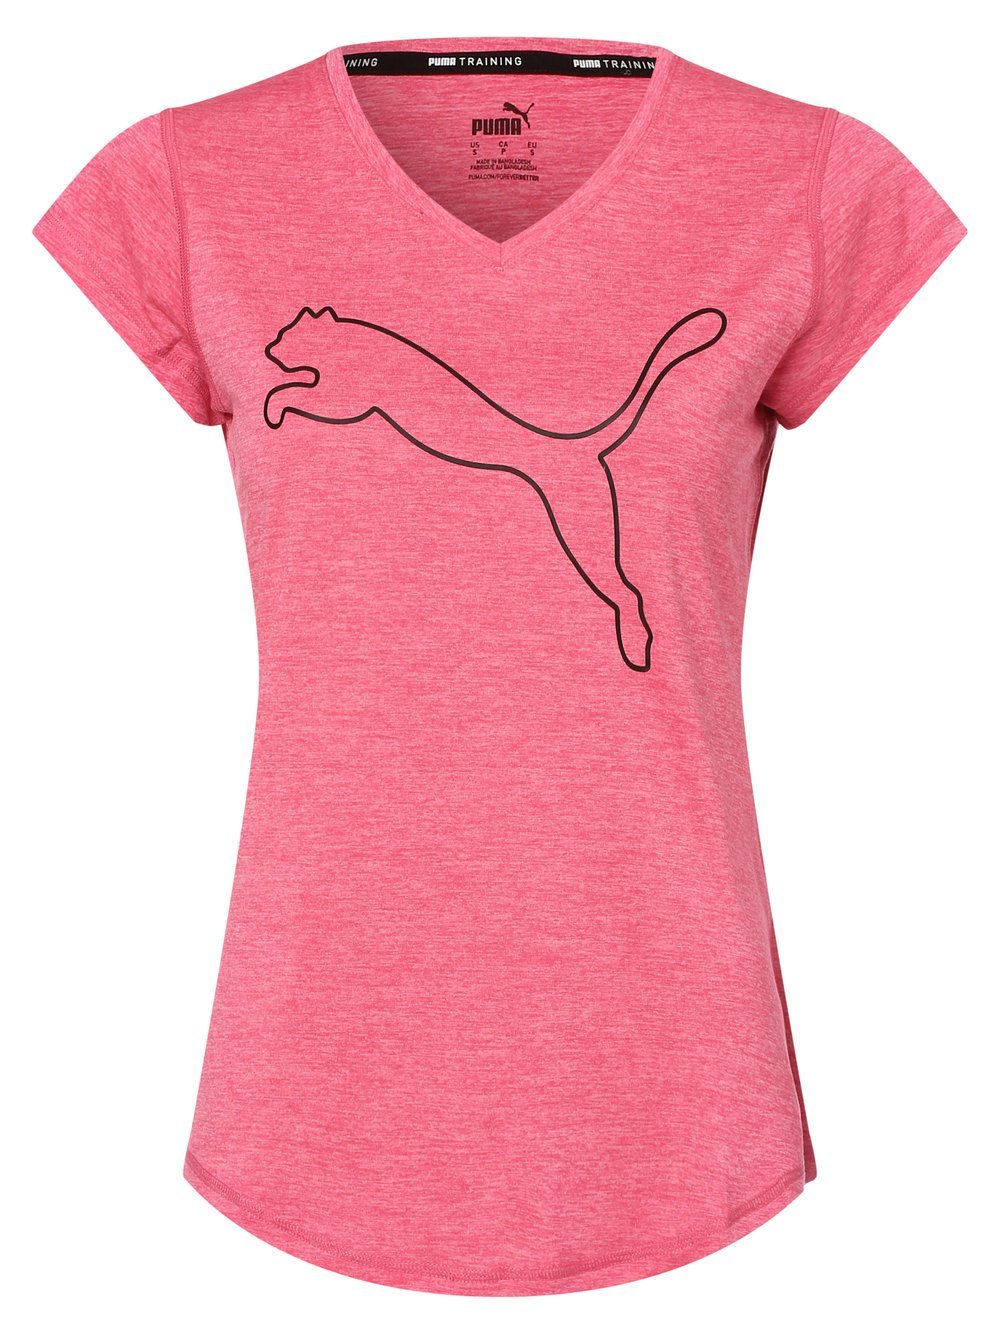 Puma - T-shirt damski, wyrazisty róż